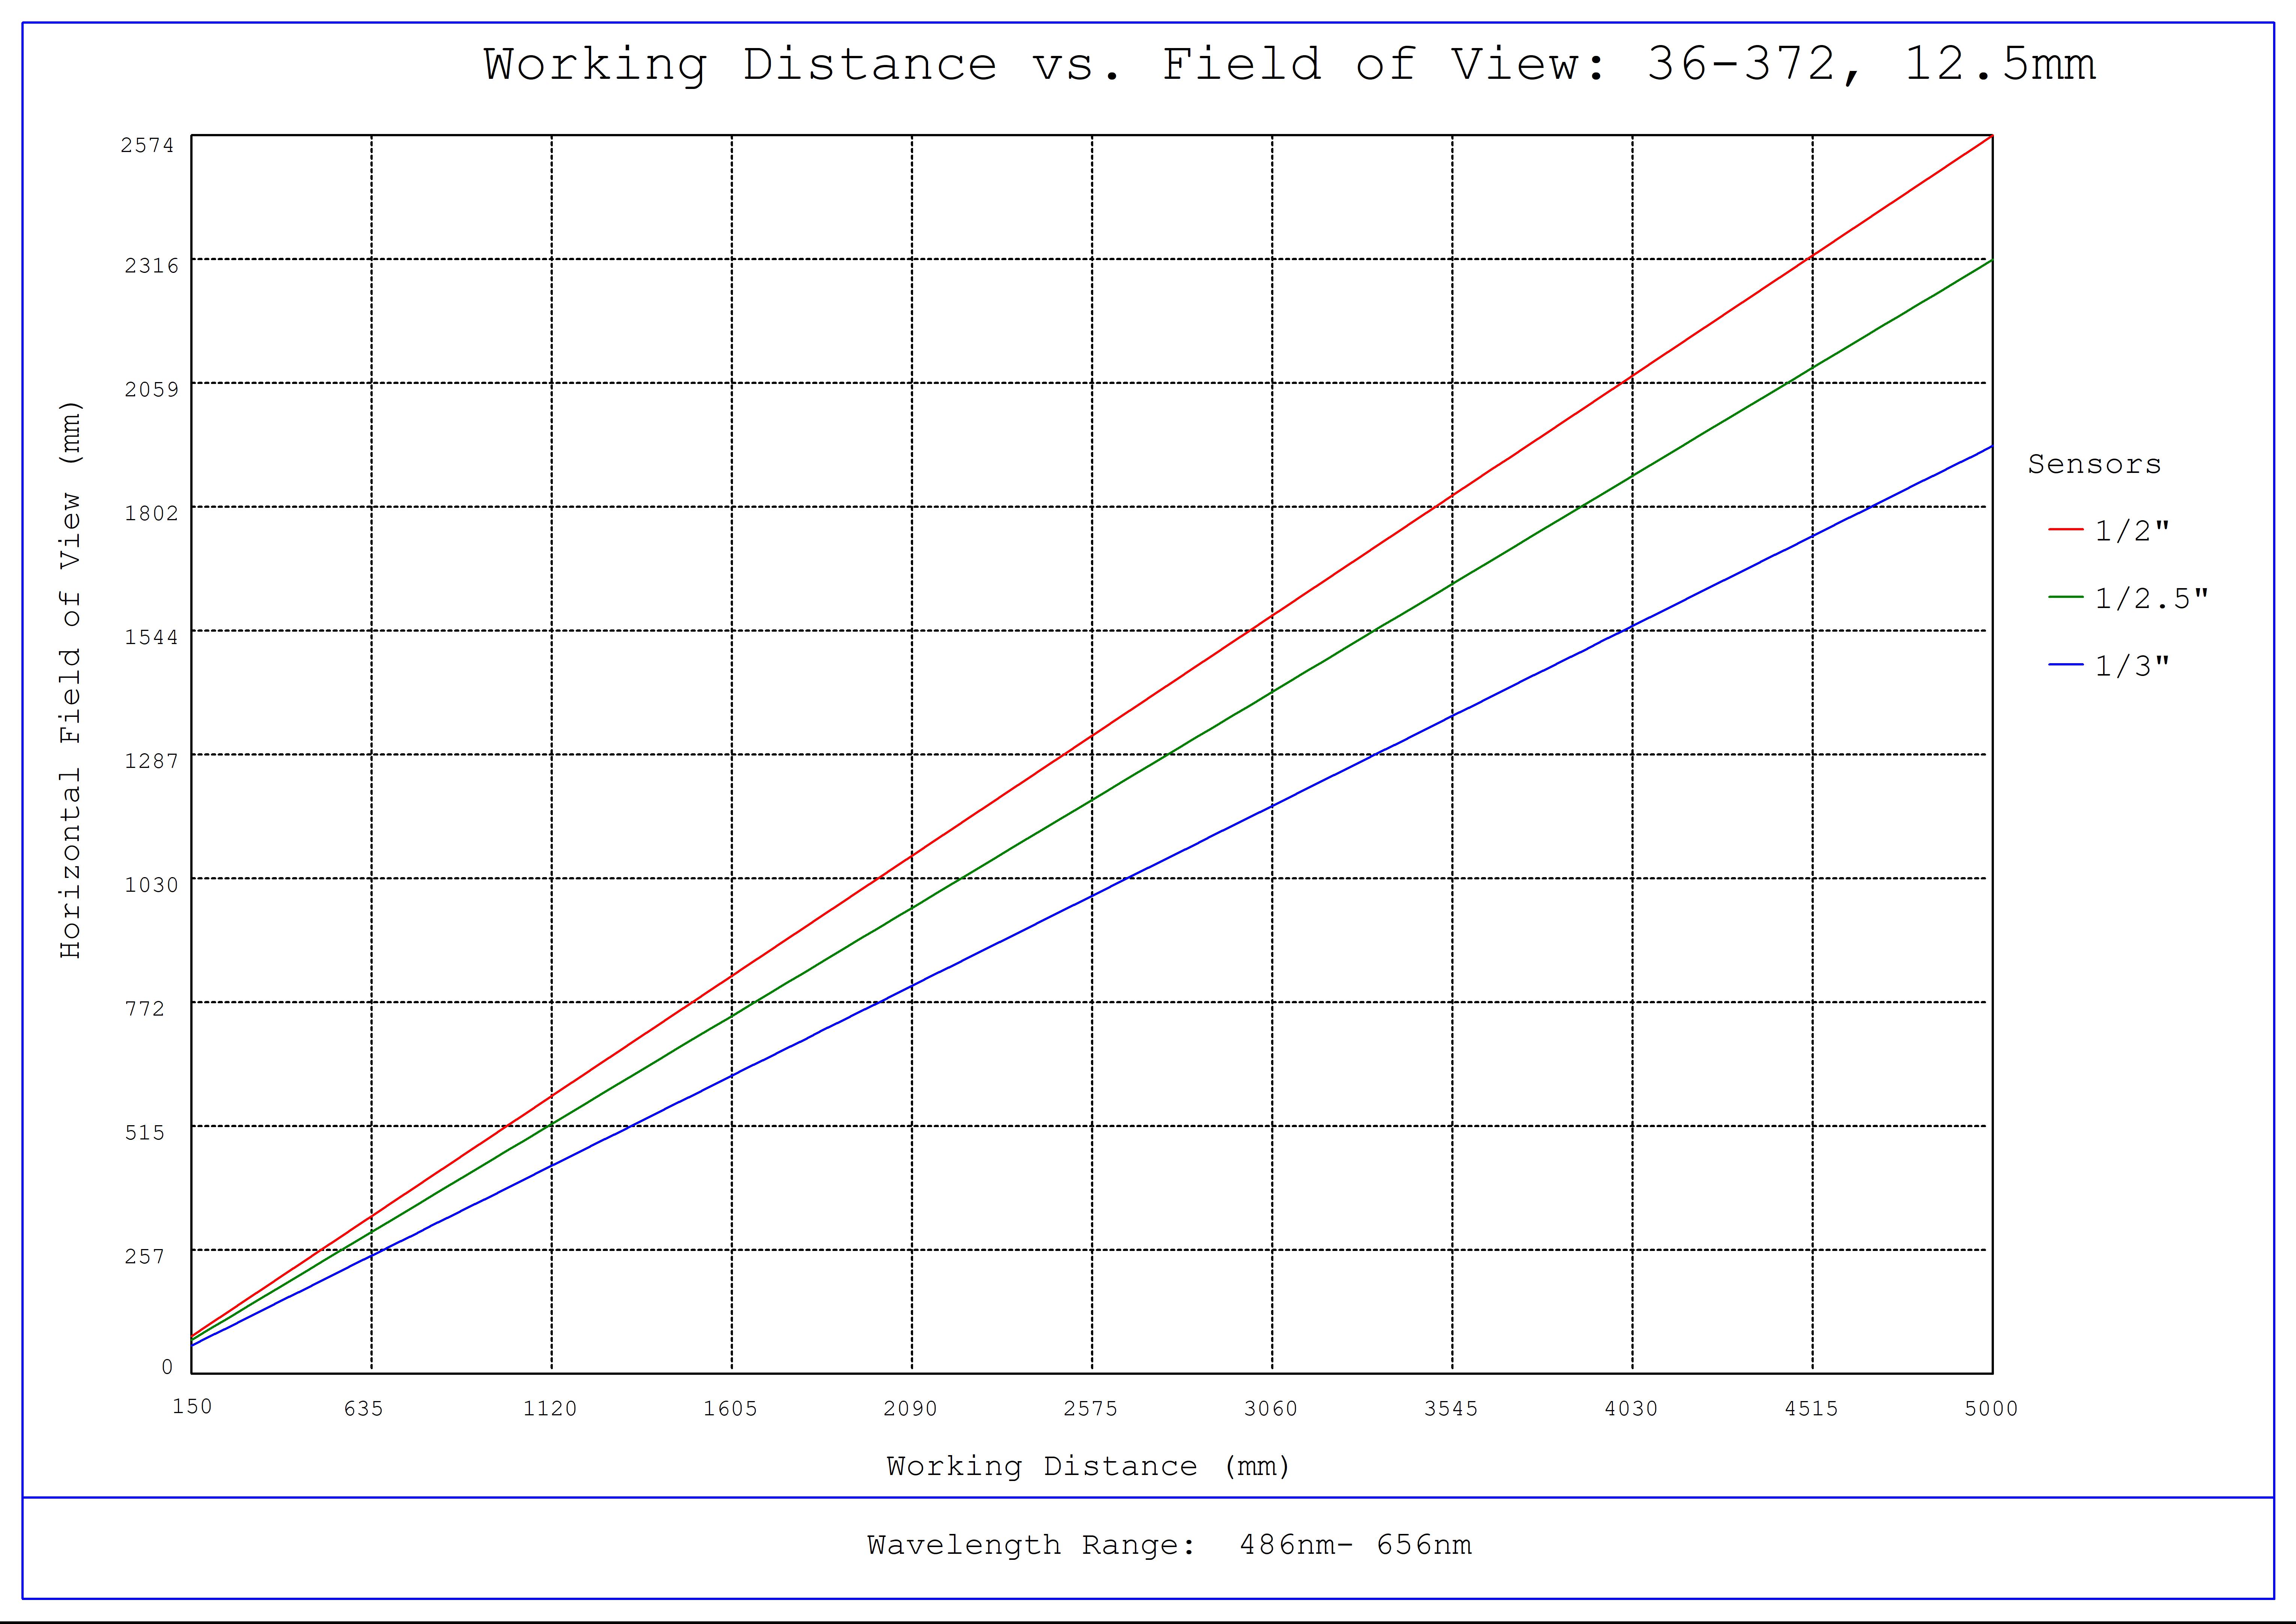 #36-372, 12.5mm FL f/2.5, Rugged Blue Series M12 Lens, Working Distance versus Field of View Plot